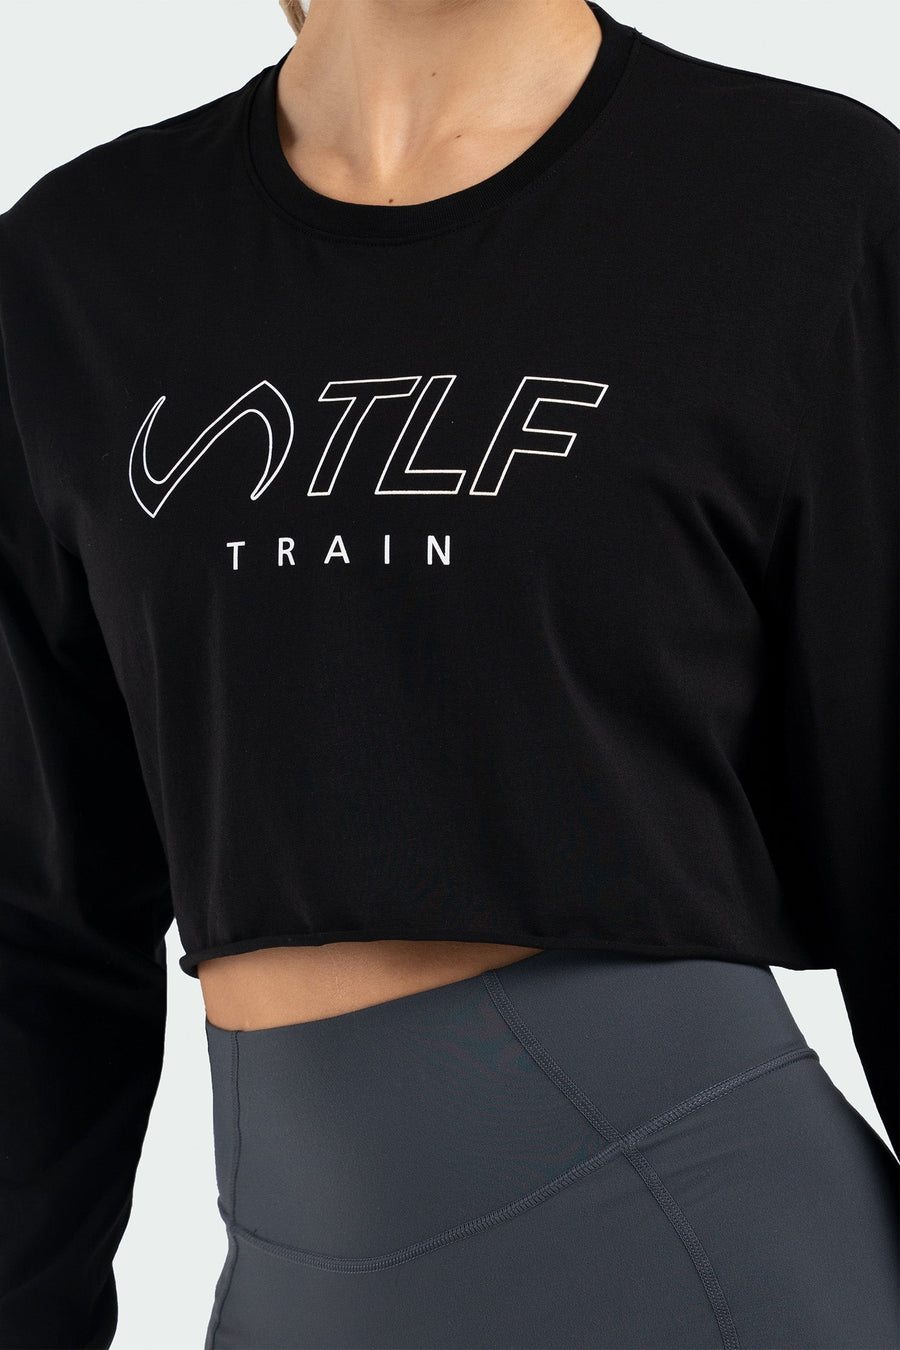 TLF Train Long Sleeve Crop Tee - Cropped Long Sleeve Workout Top - Black - 2